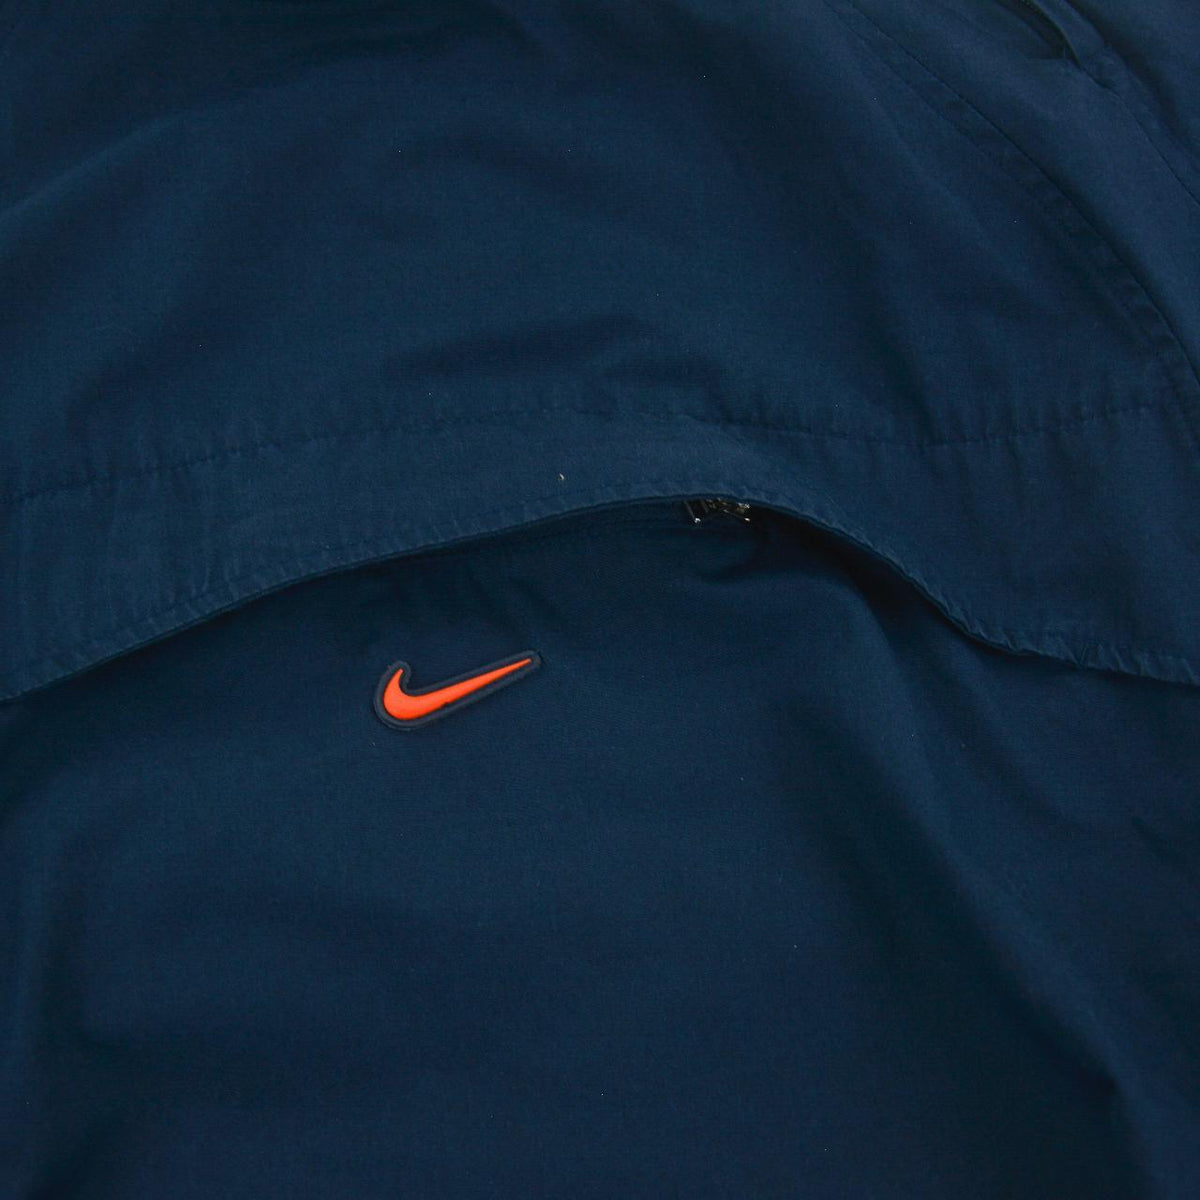 Vintage Nike Neck Zip Reversible Fleece Jacket Size M